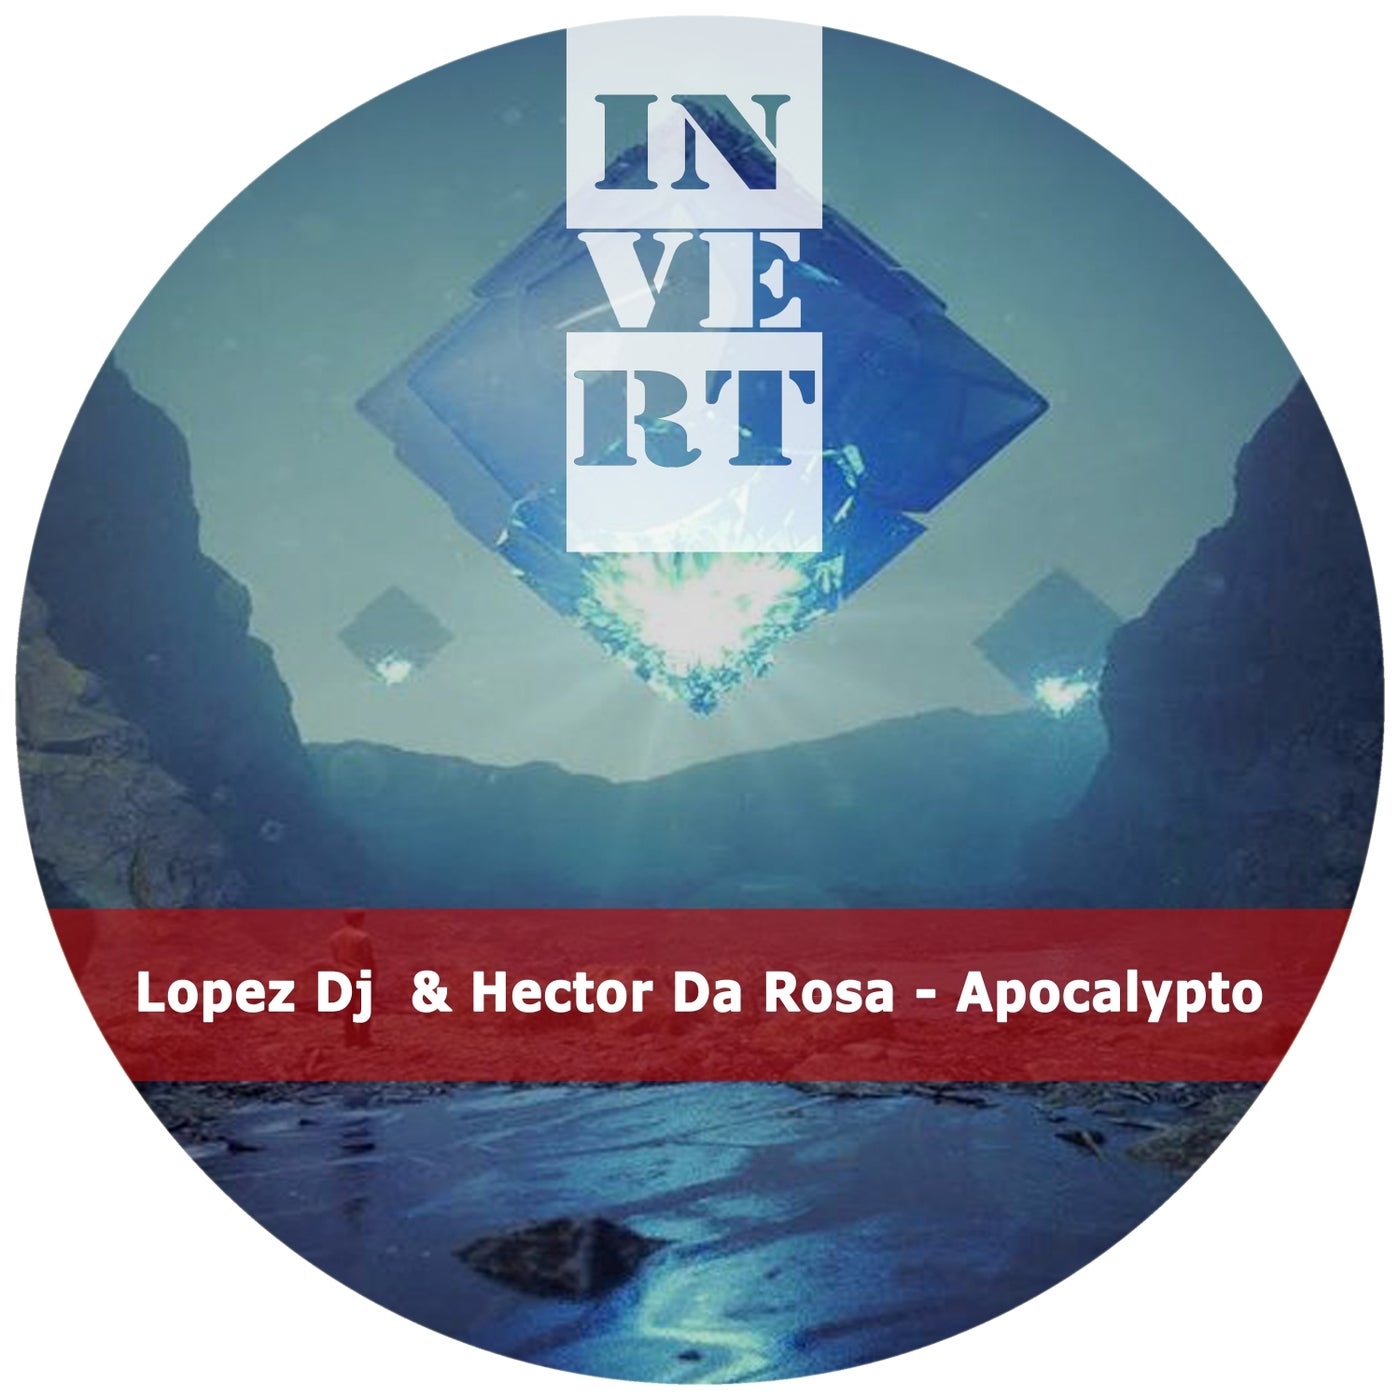 Lopez DJ & Hector Da Rosa - Apocalypto [Invert]